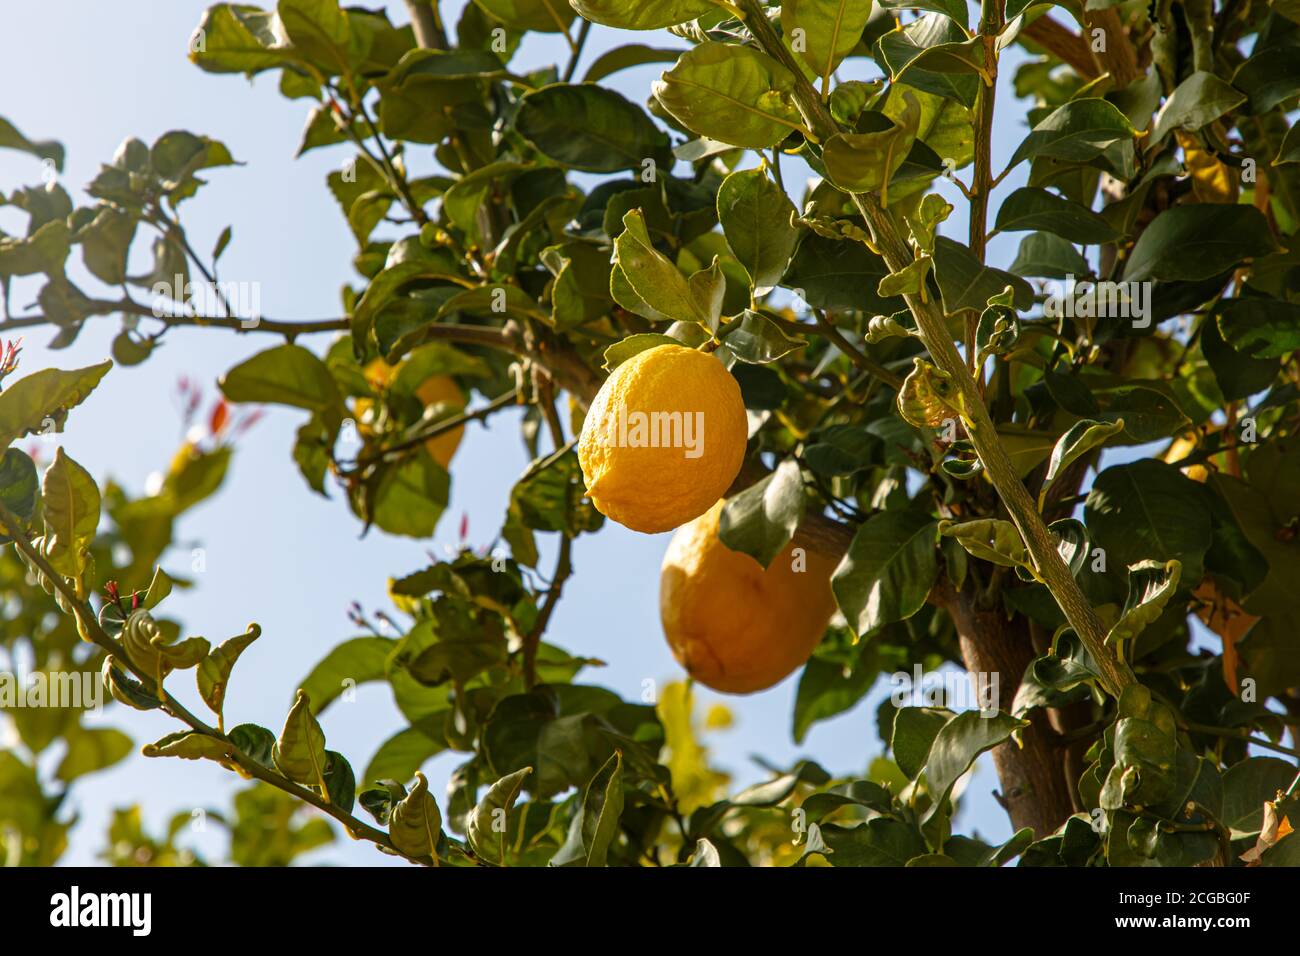 Yellow lemons grow on a tree Stock Photo